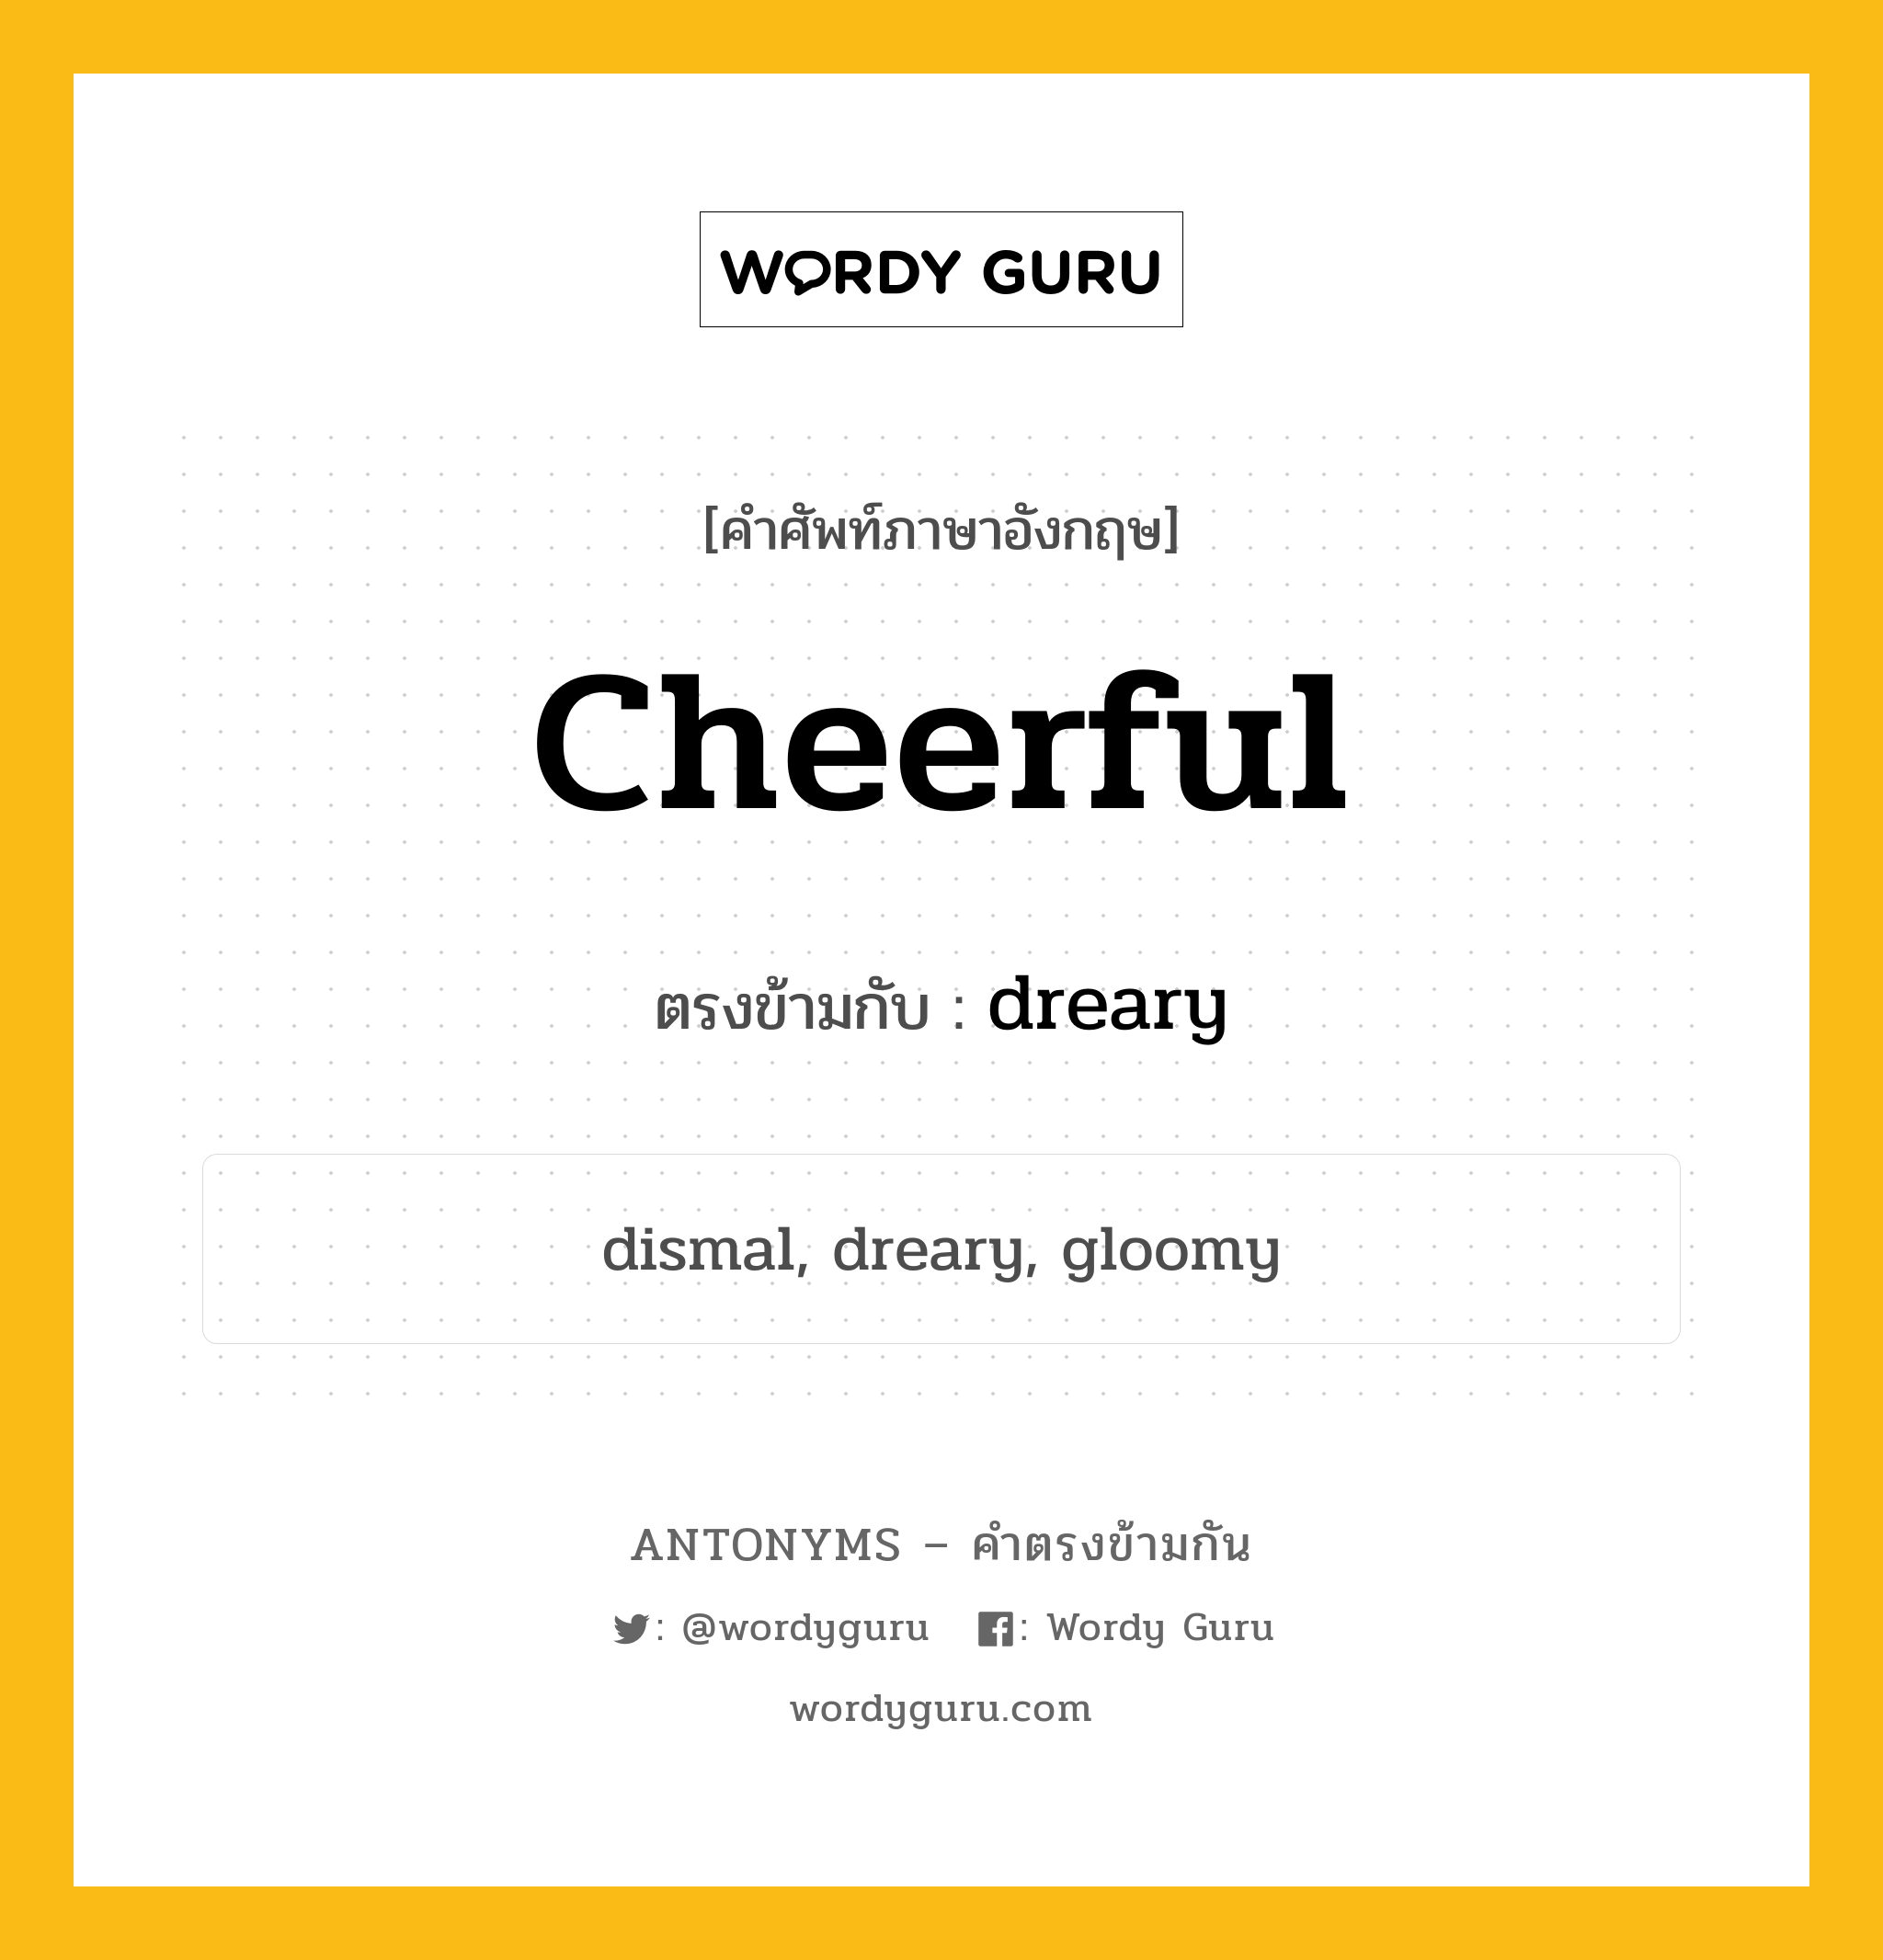 cheerful เป็นคำตรงข้ามกับคำไหนบ้าง?, คำศัพท์ภาษาอังกฤษ cheerful ตรงข้ามกับ dreary หมวด dreary